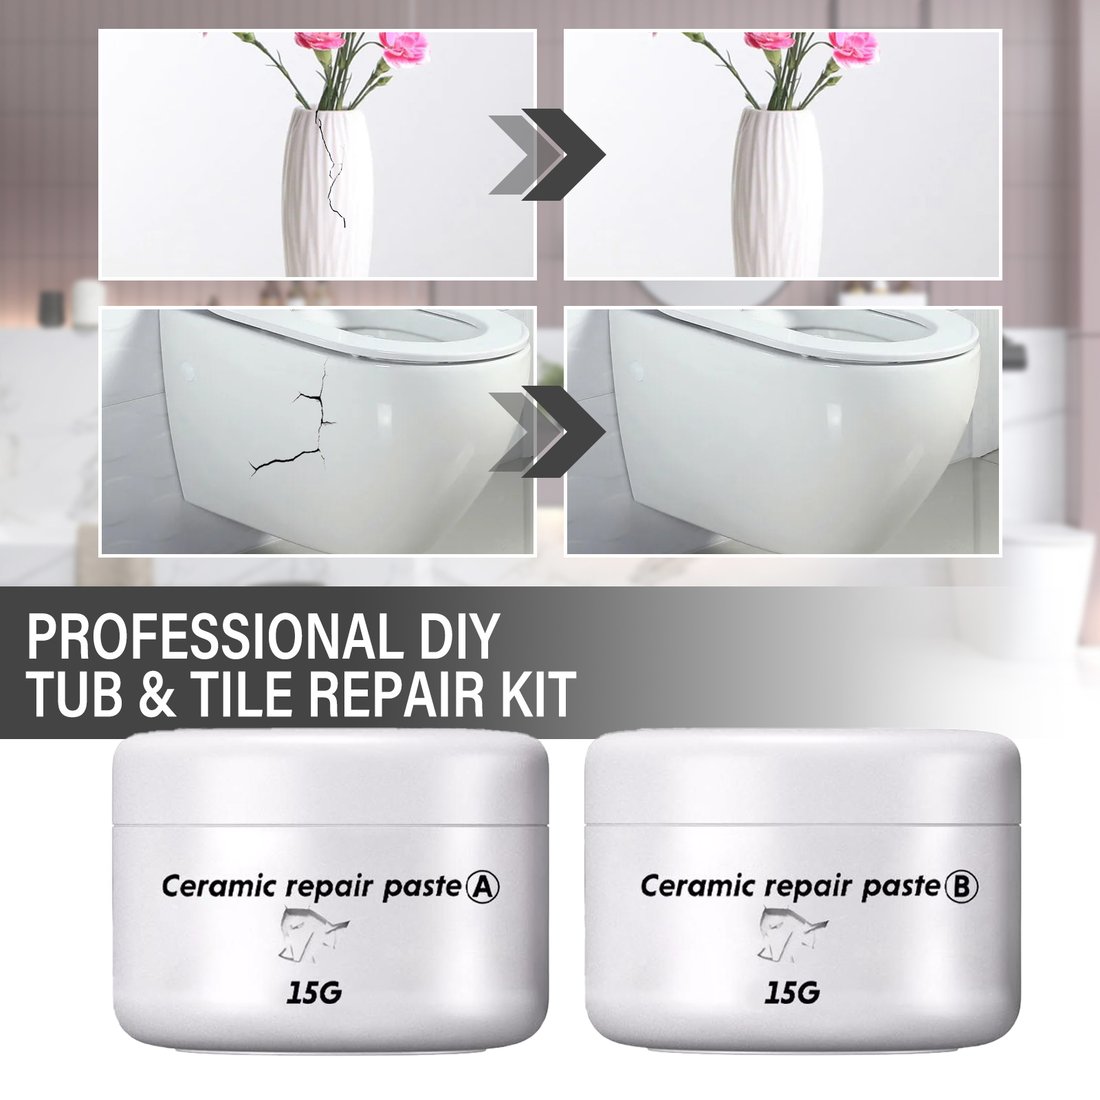 Tile Repair Paste- buy more save more - Home Essentials Store Retail